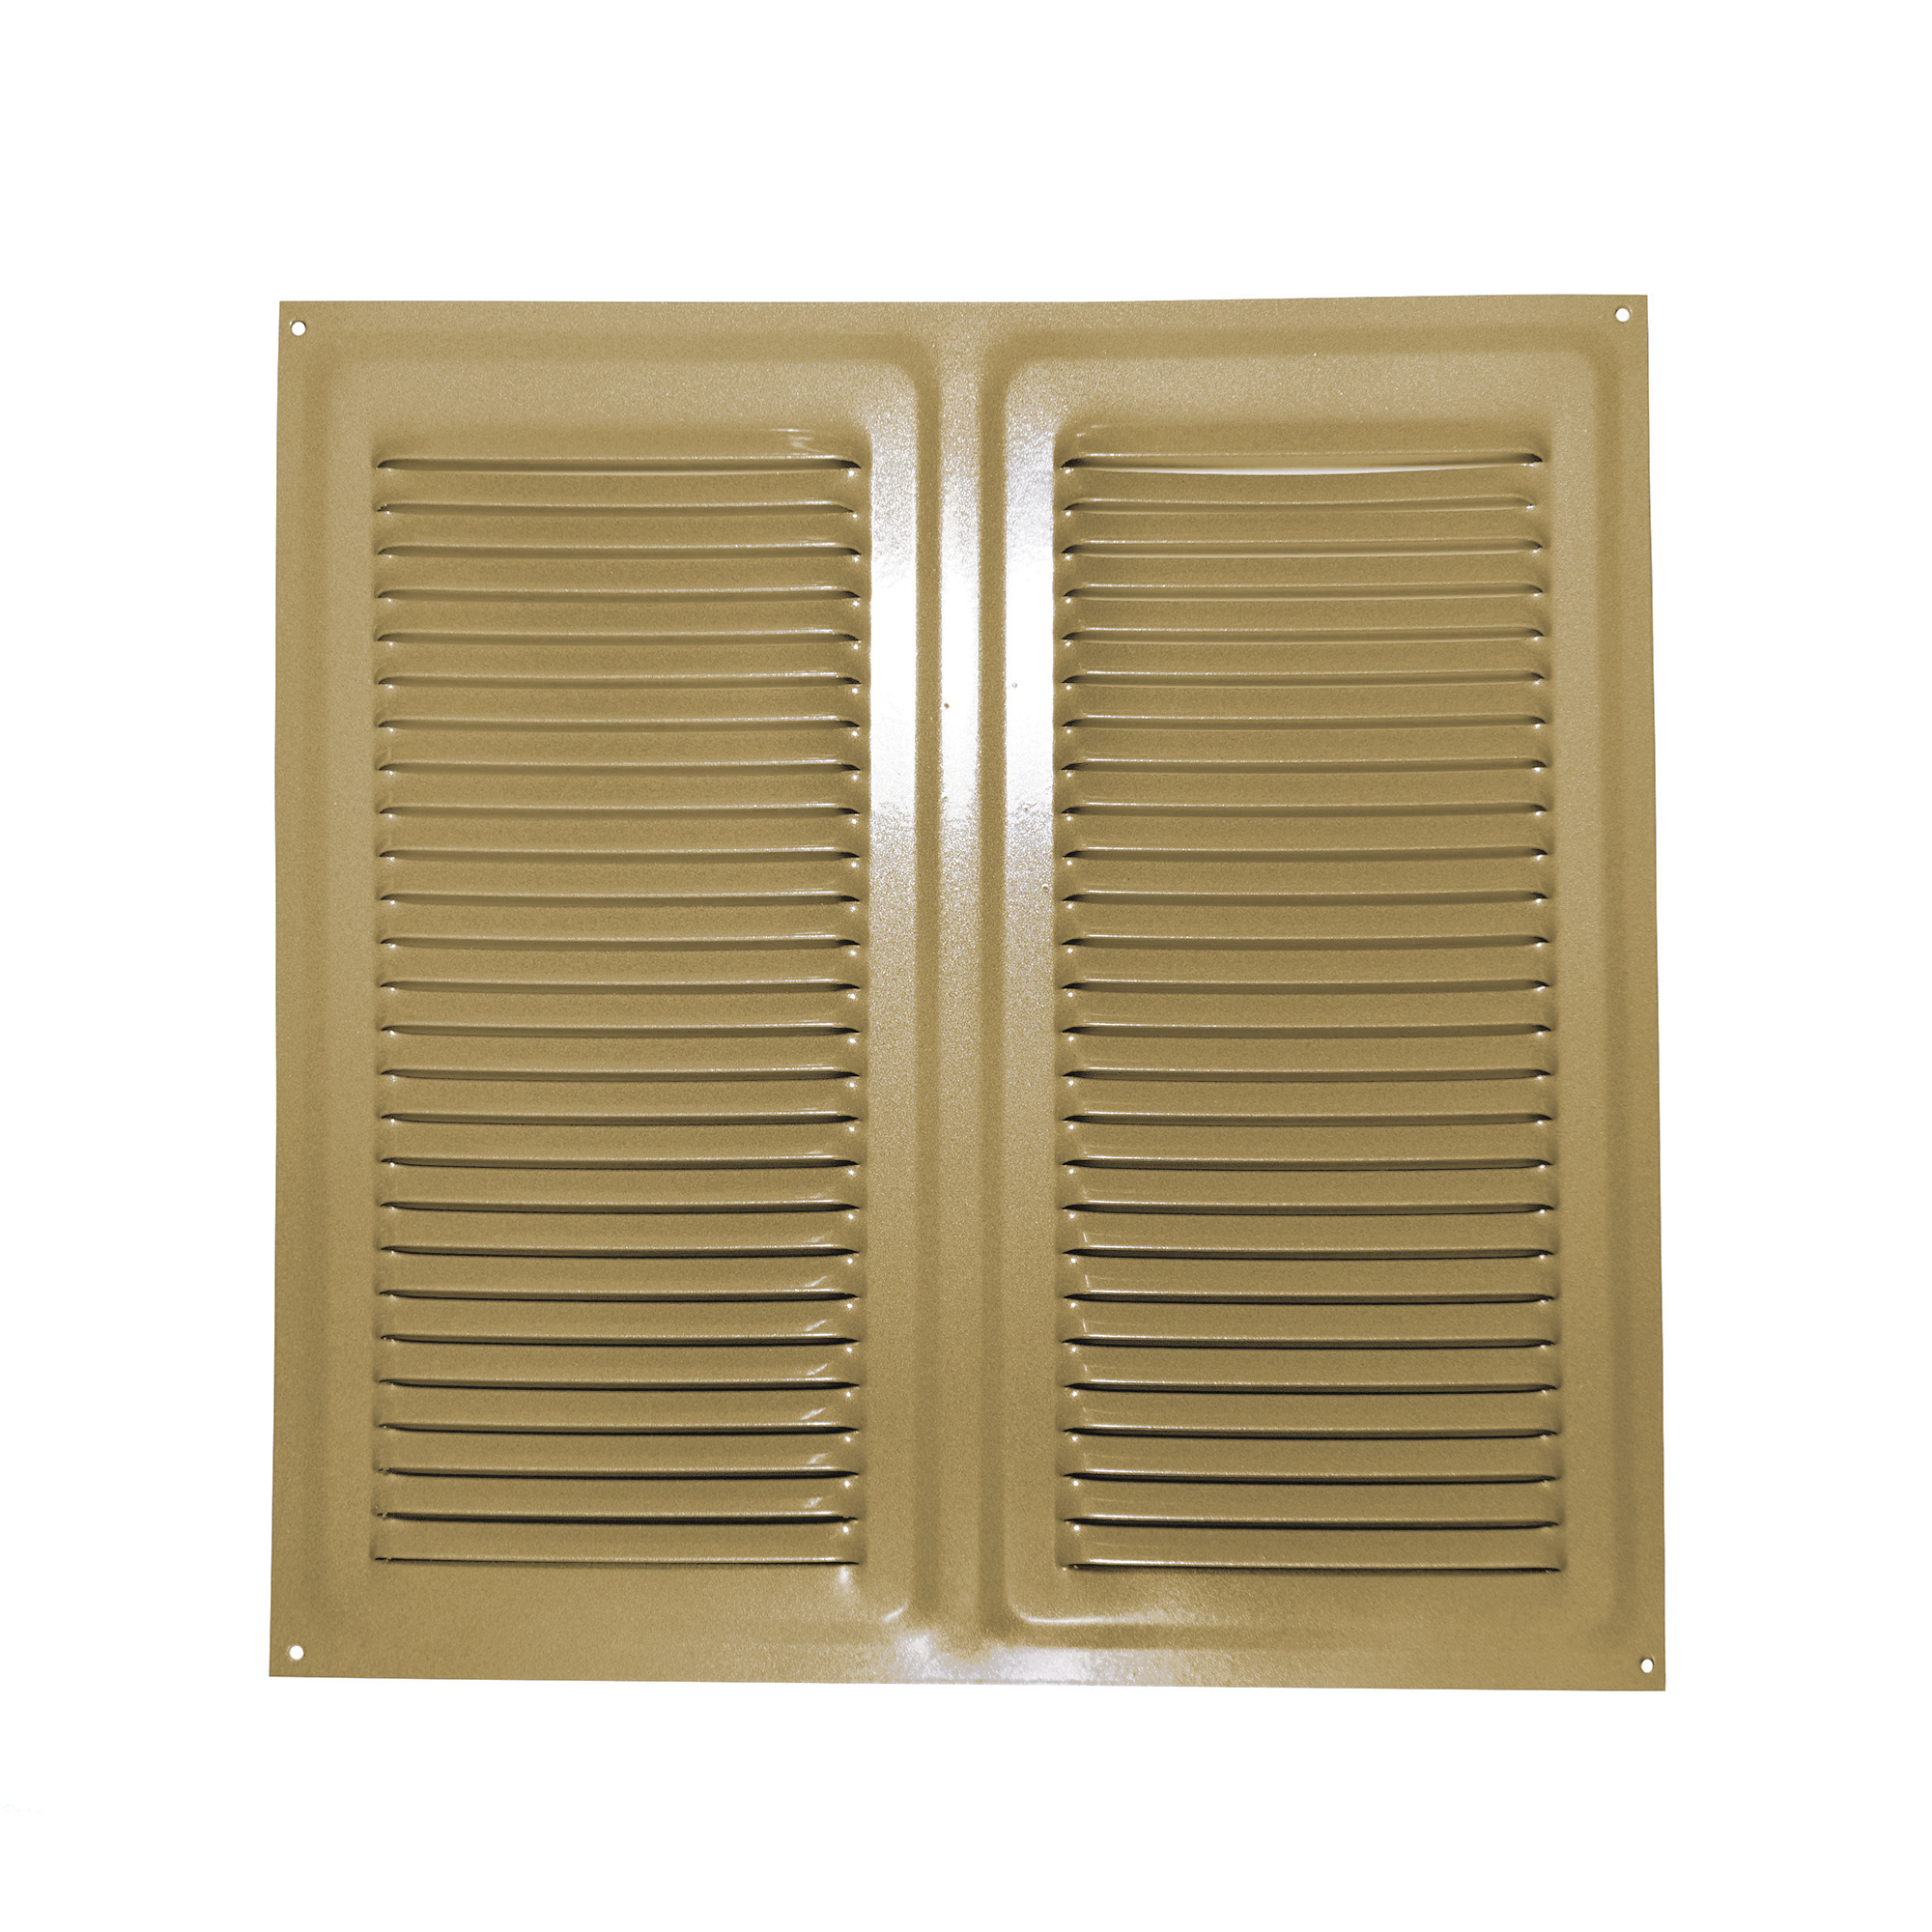 Решетка вентиляционная Трибатрон Золотой металлик 300x300 мм решетка вентиляционная эра 1515мц 150x150 мм